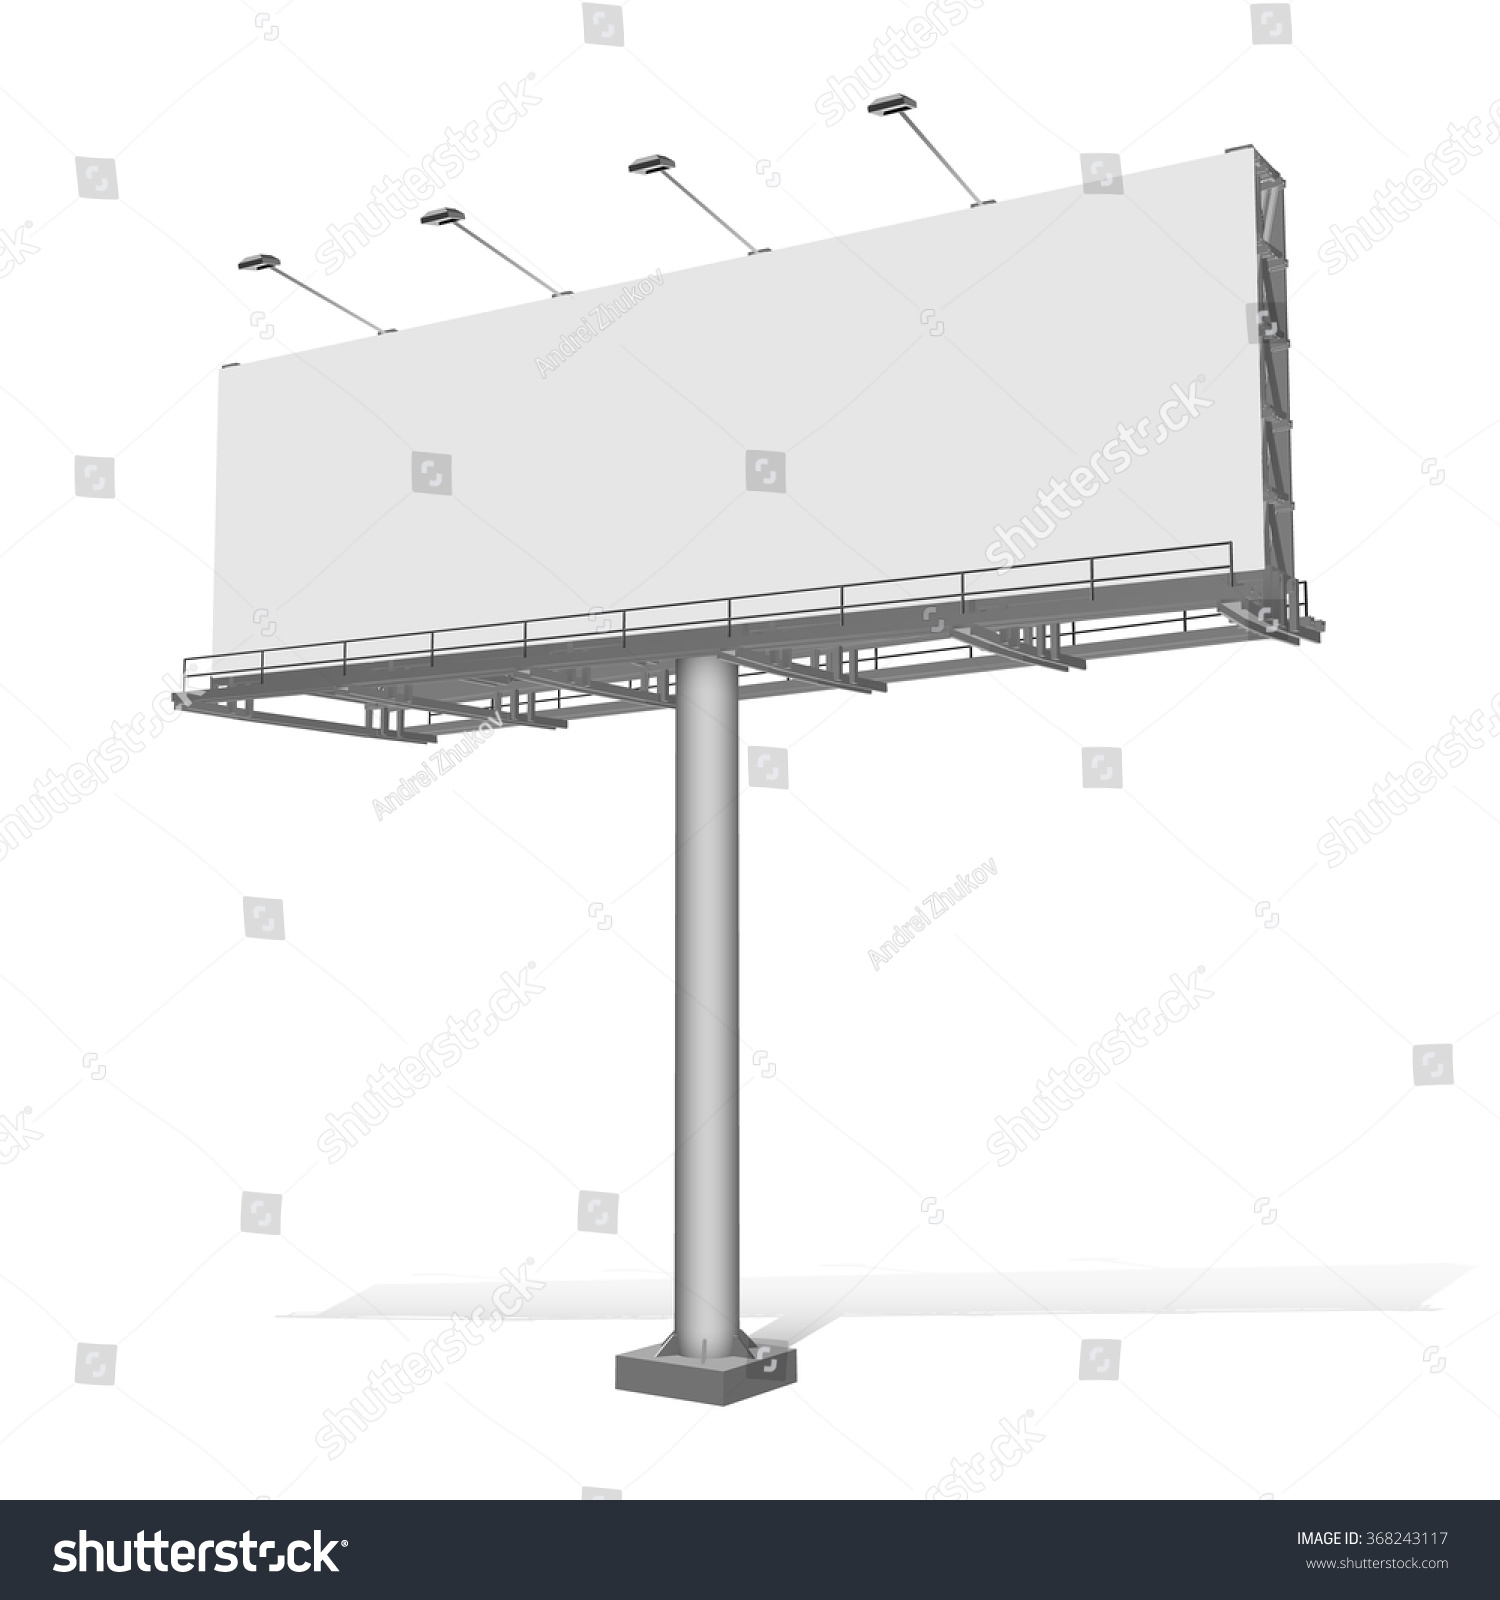 Advertising construction for outdoor advertising big billboard. Billboard for your design. #368243117